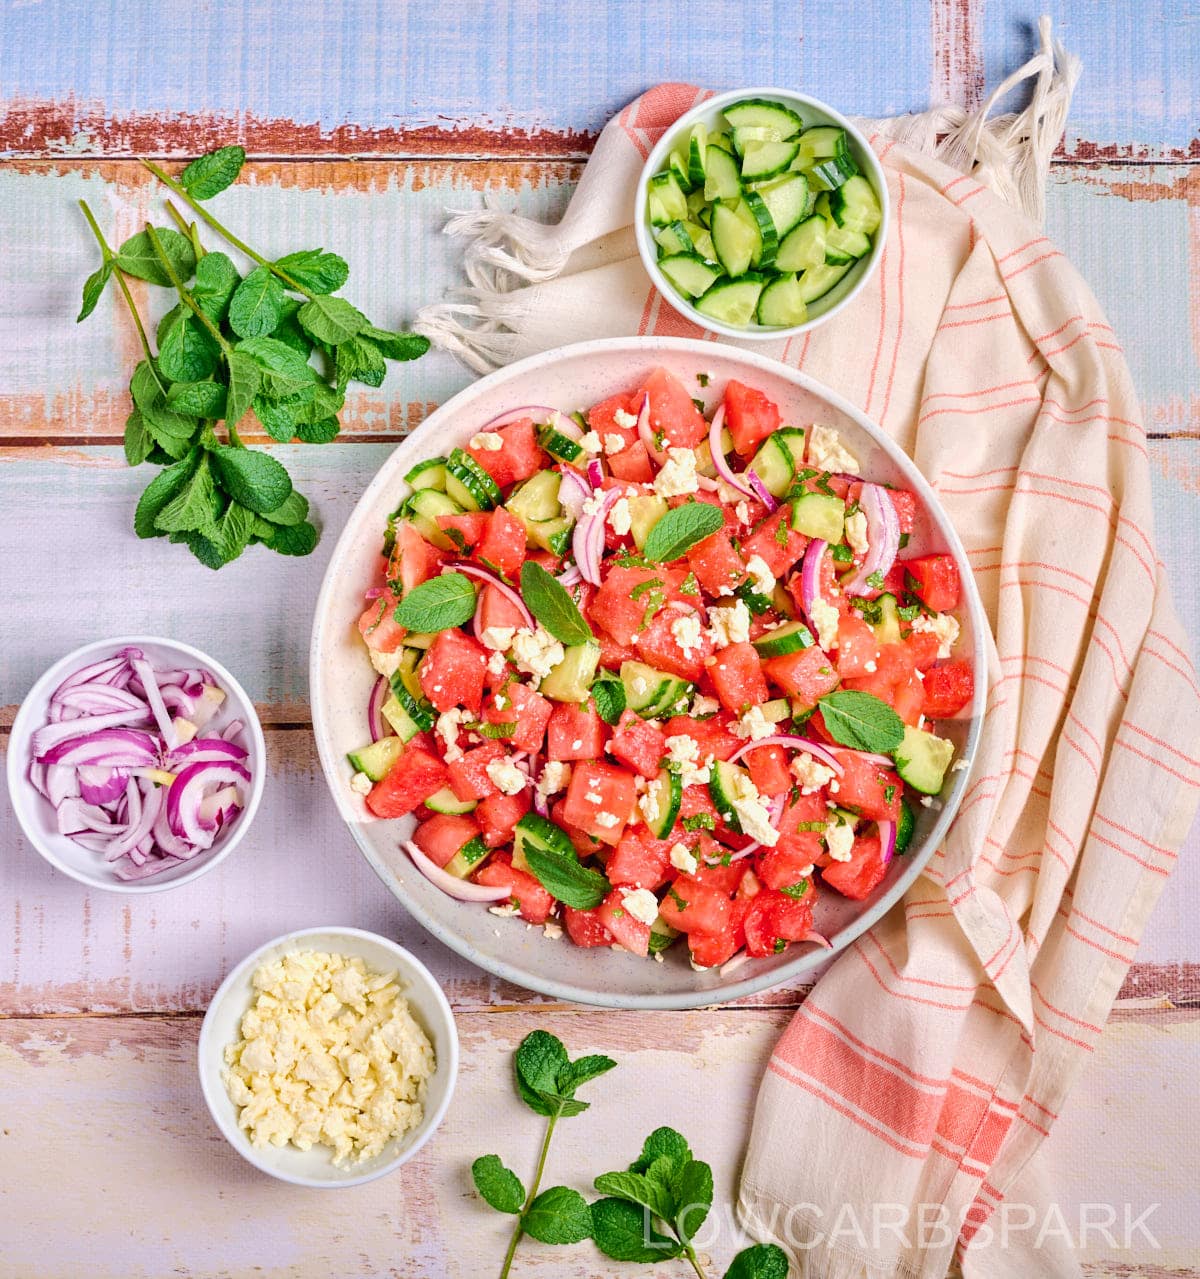 my favorite watermelon salad recipe